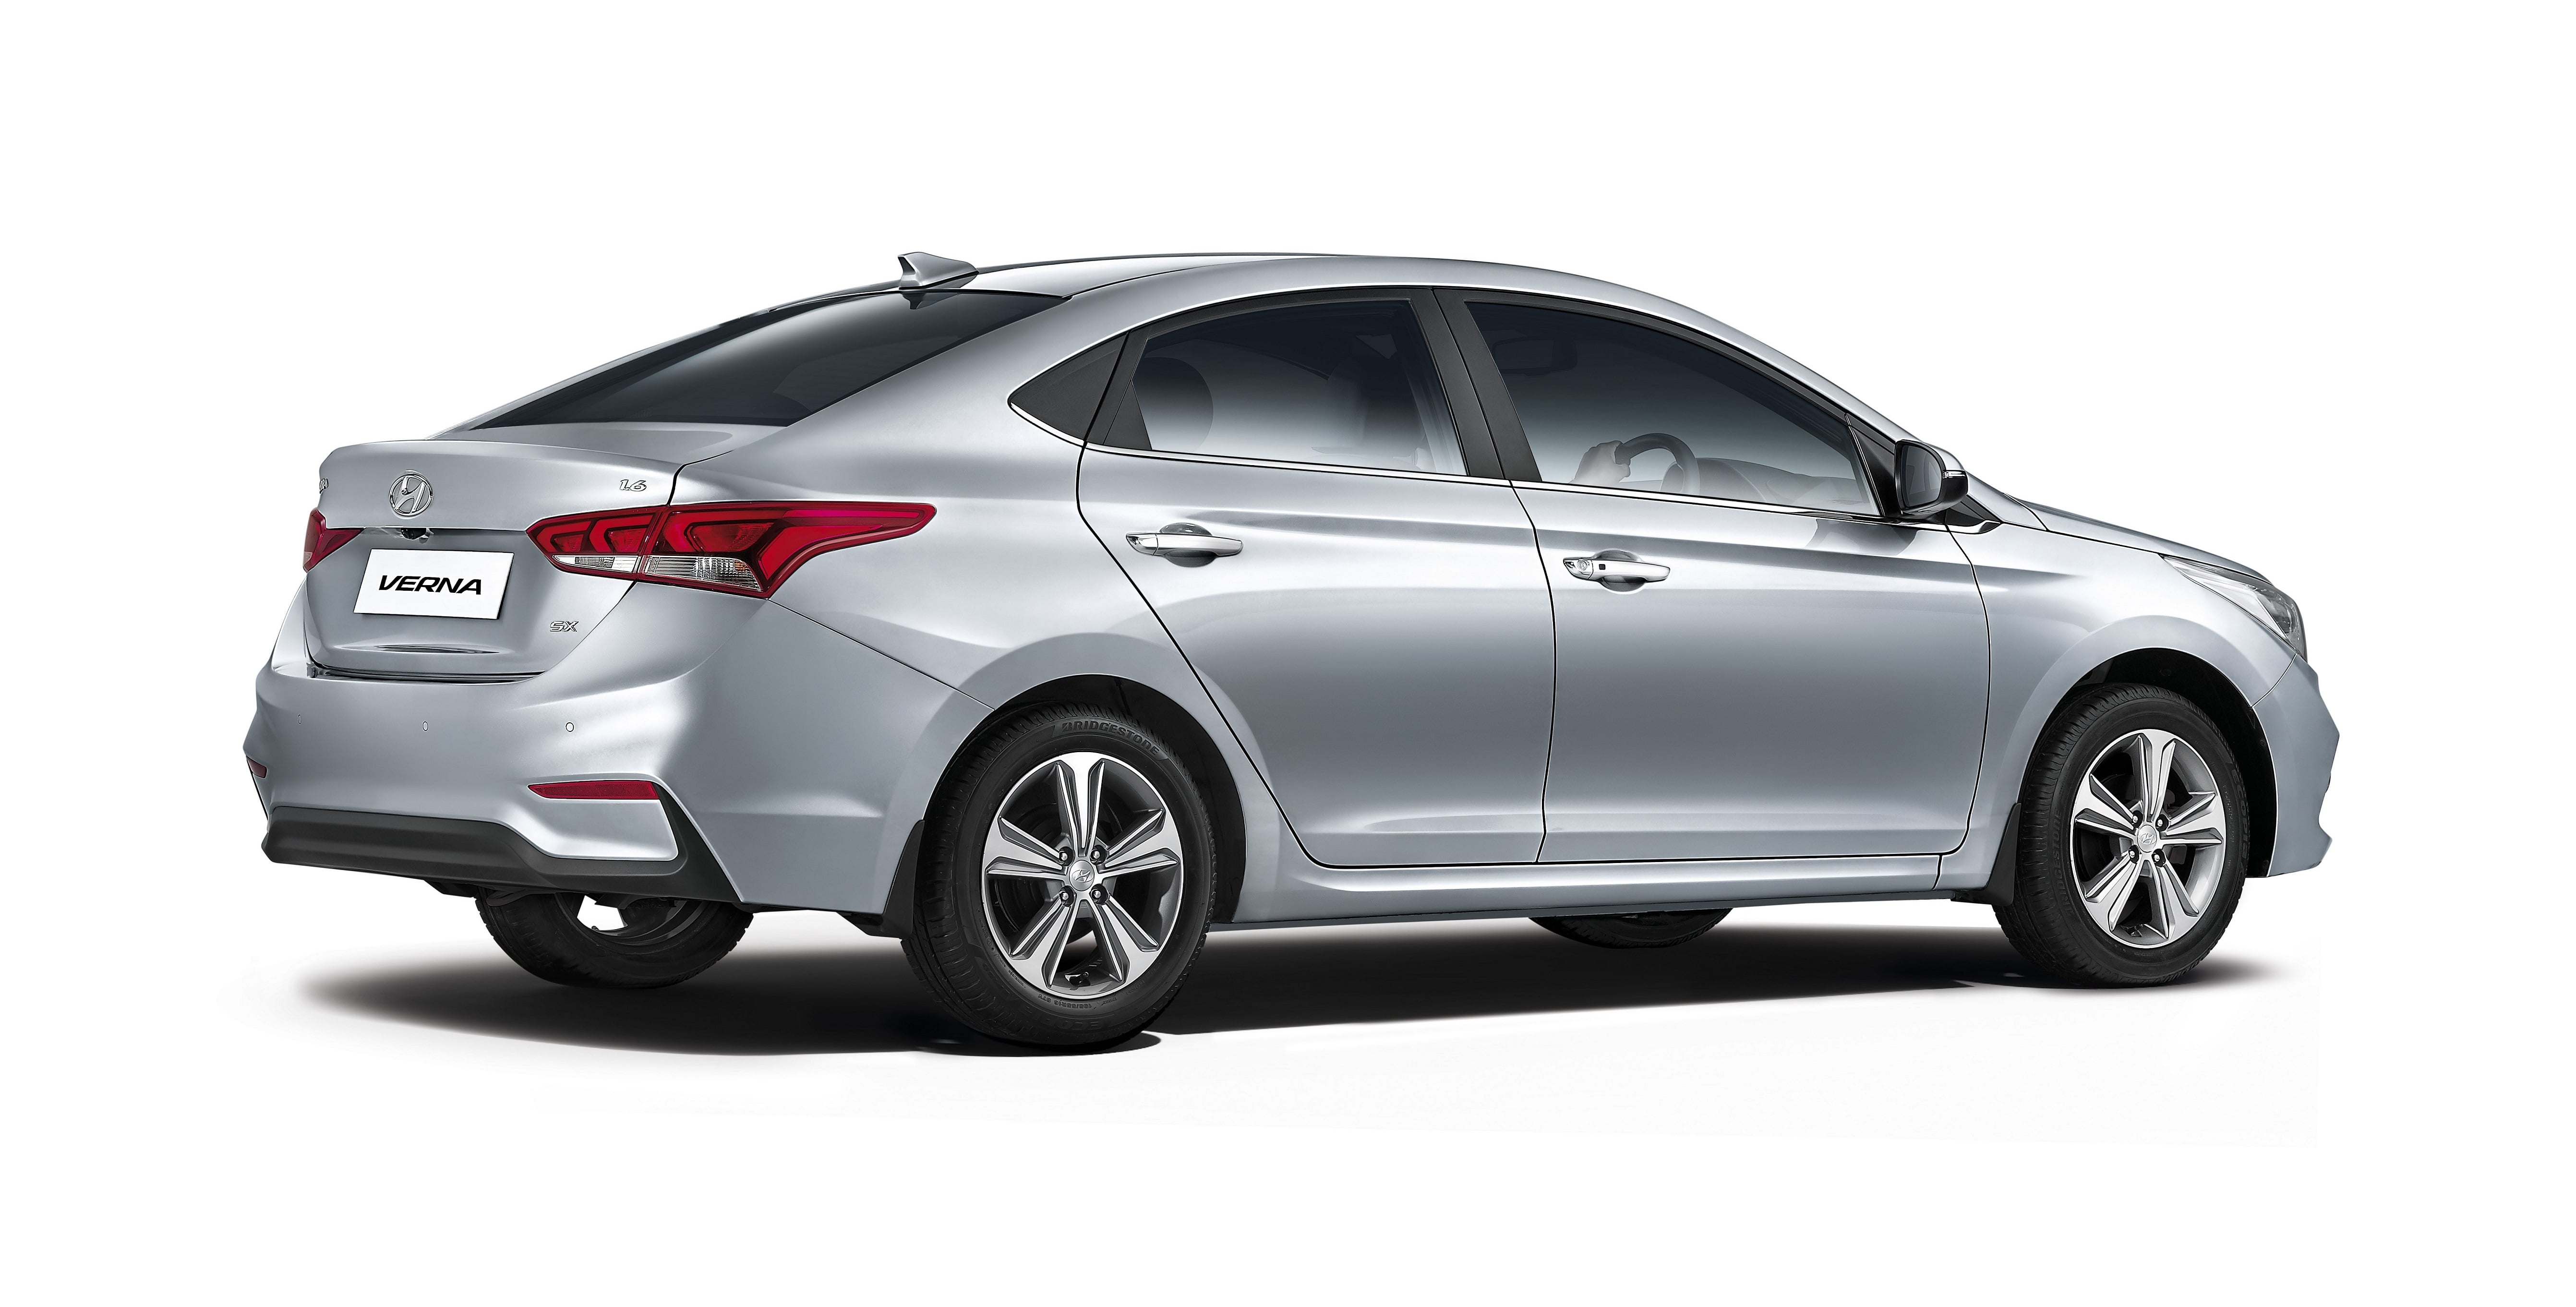 New 2017 Hyundai Verna vs Old Model Comparison - Price ...